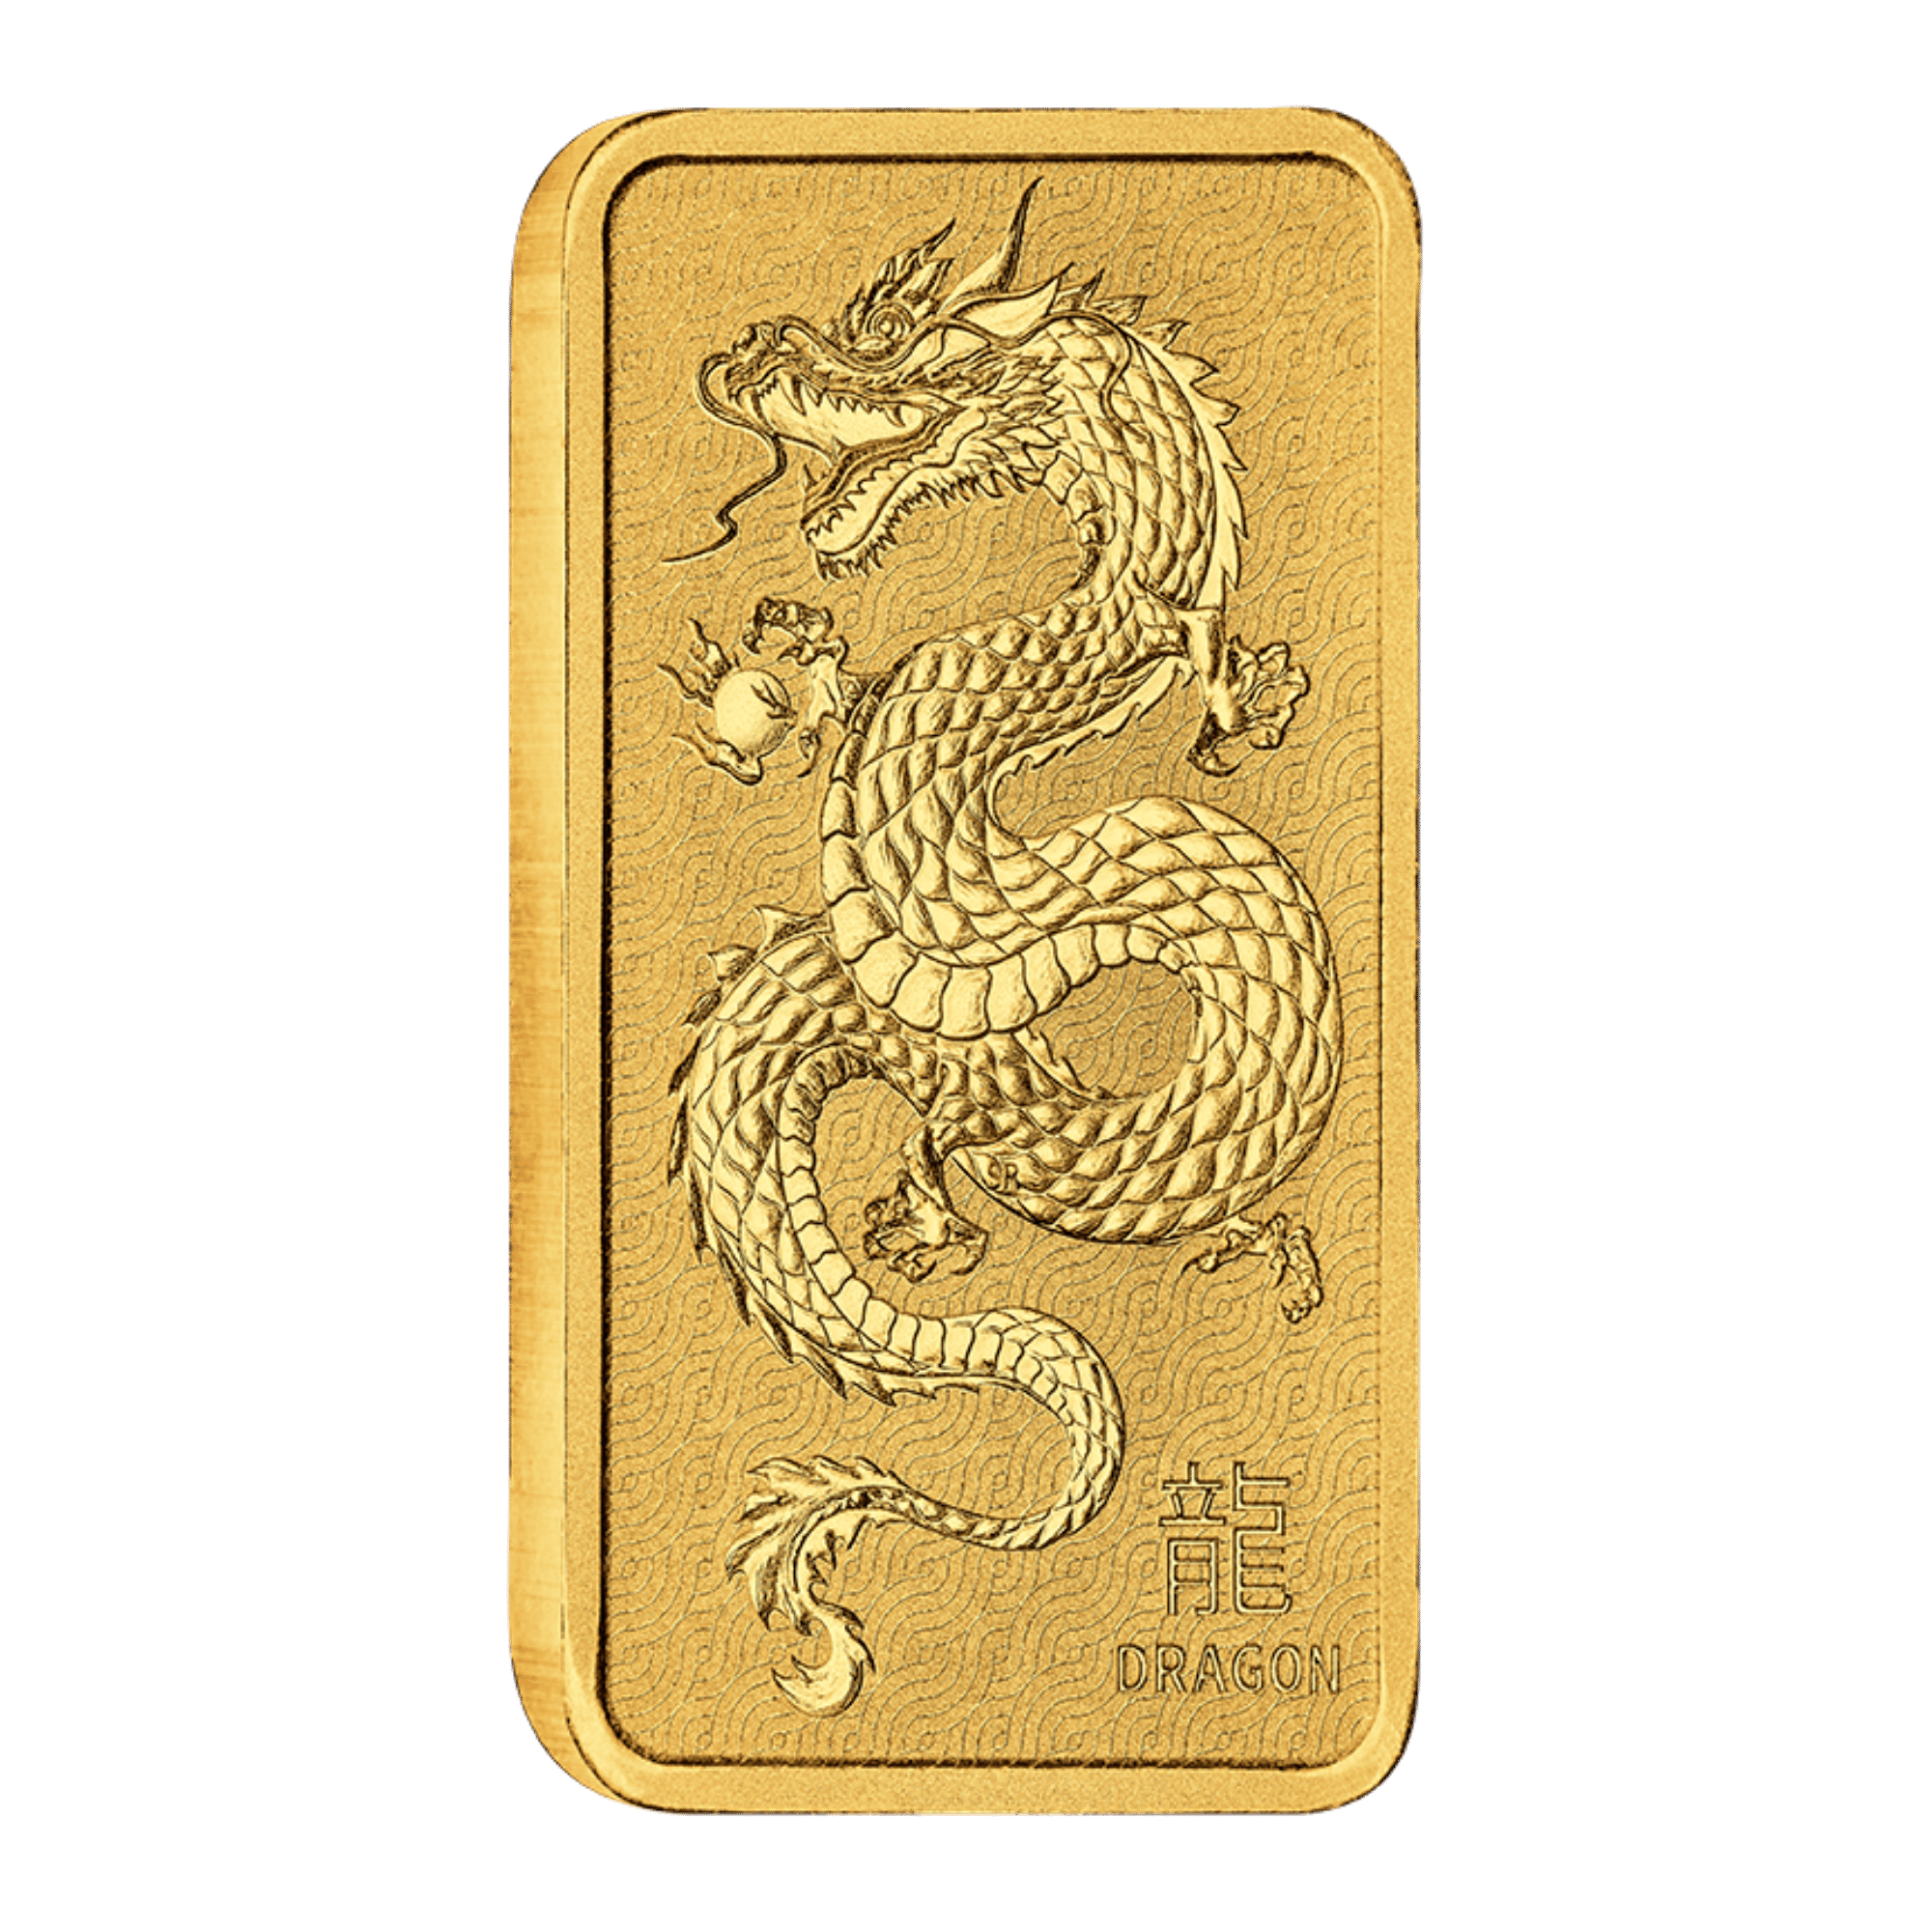 2024 1oz Perth Mint Gold Lunar Dragon Bar